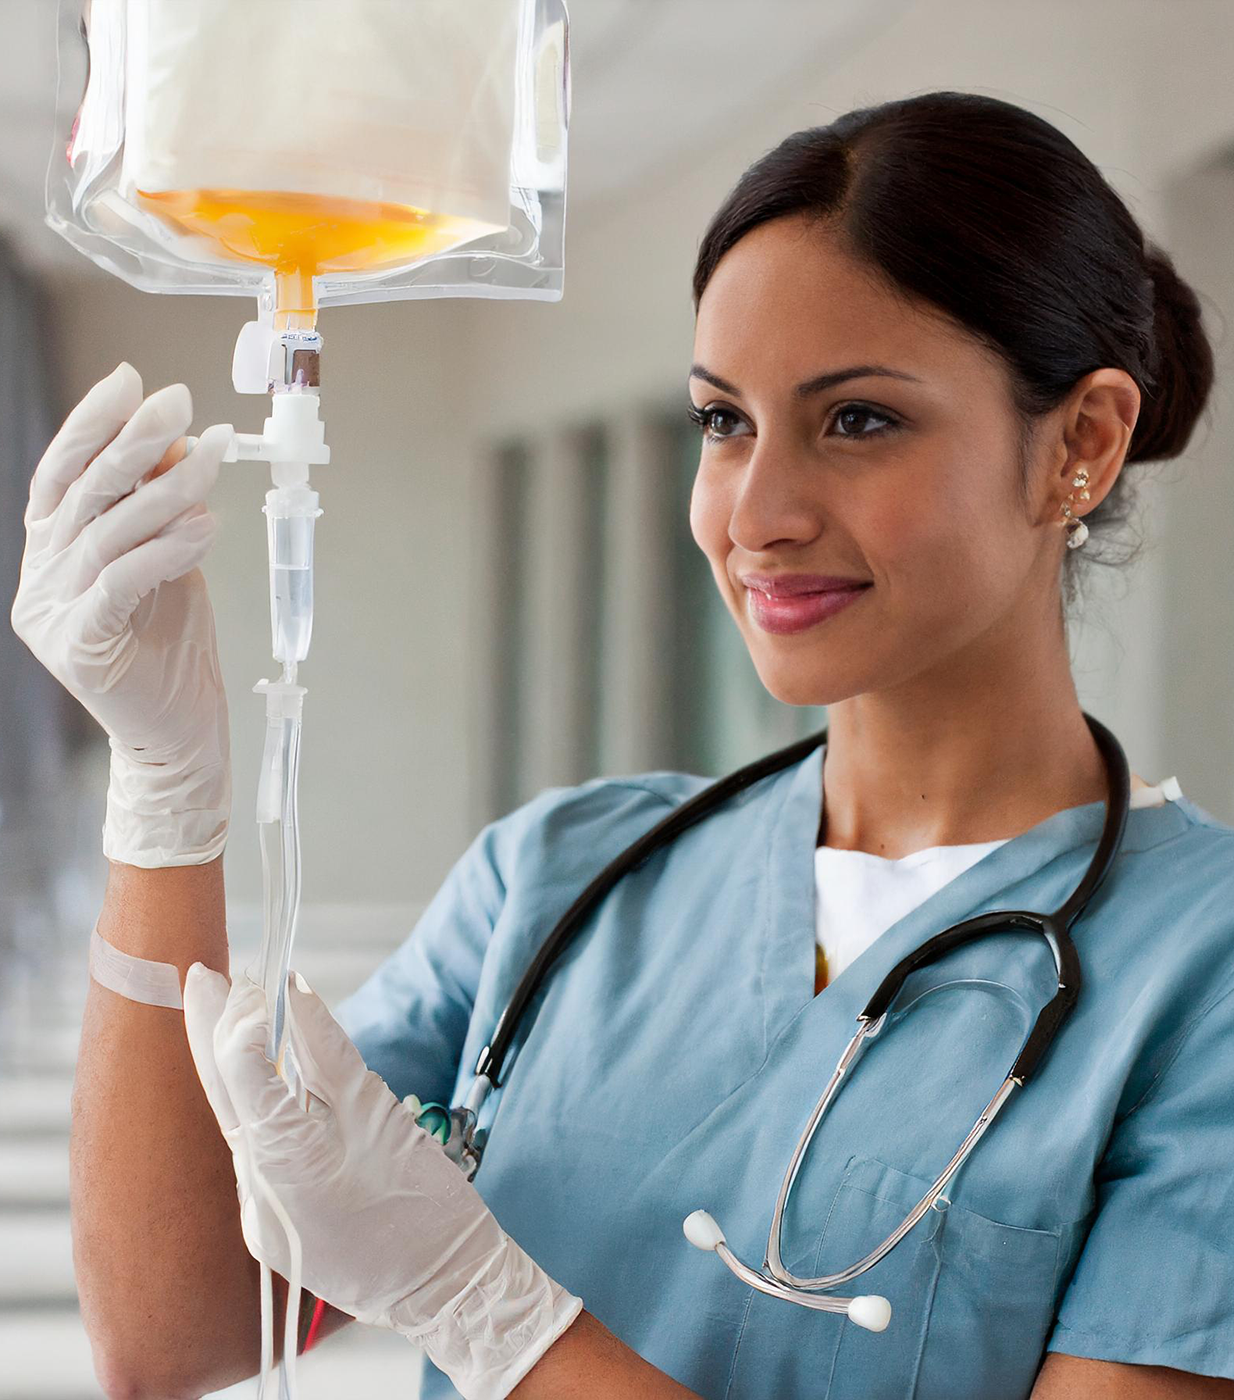 Firefly Nurse preparing an IV bag 91136